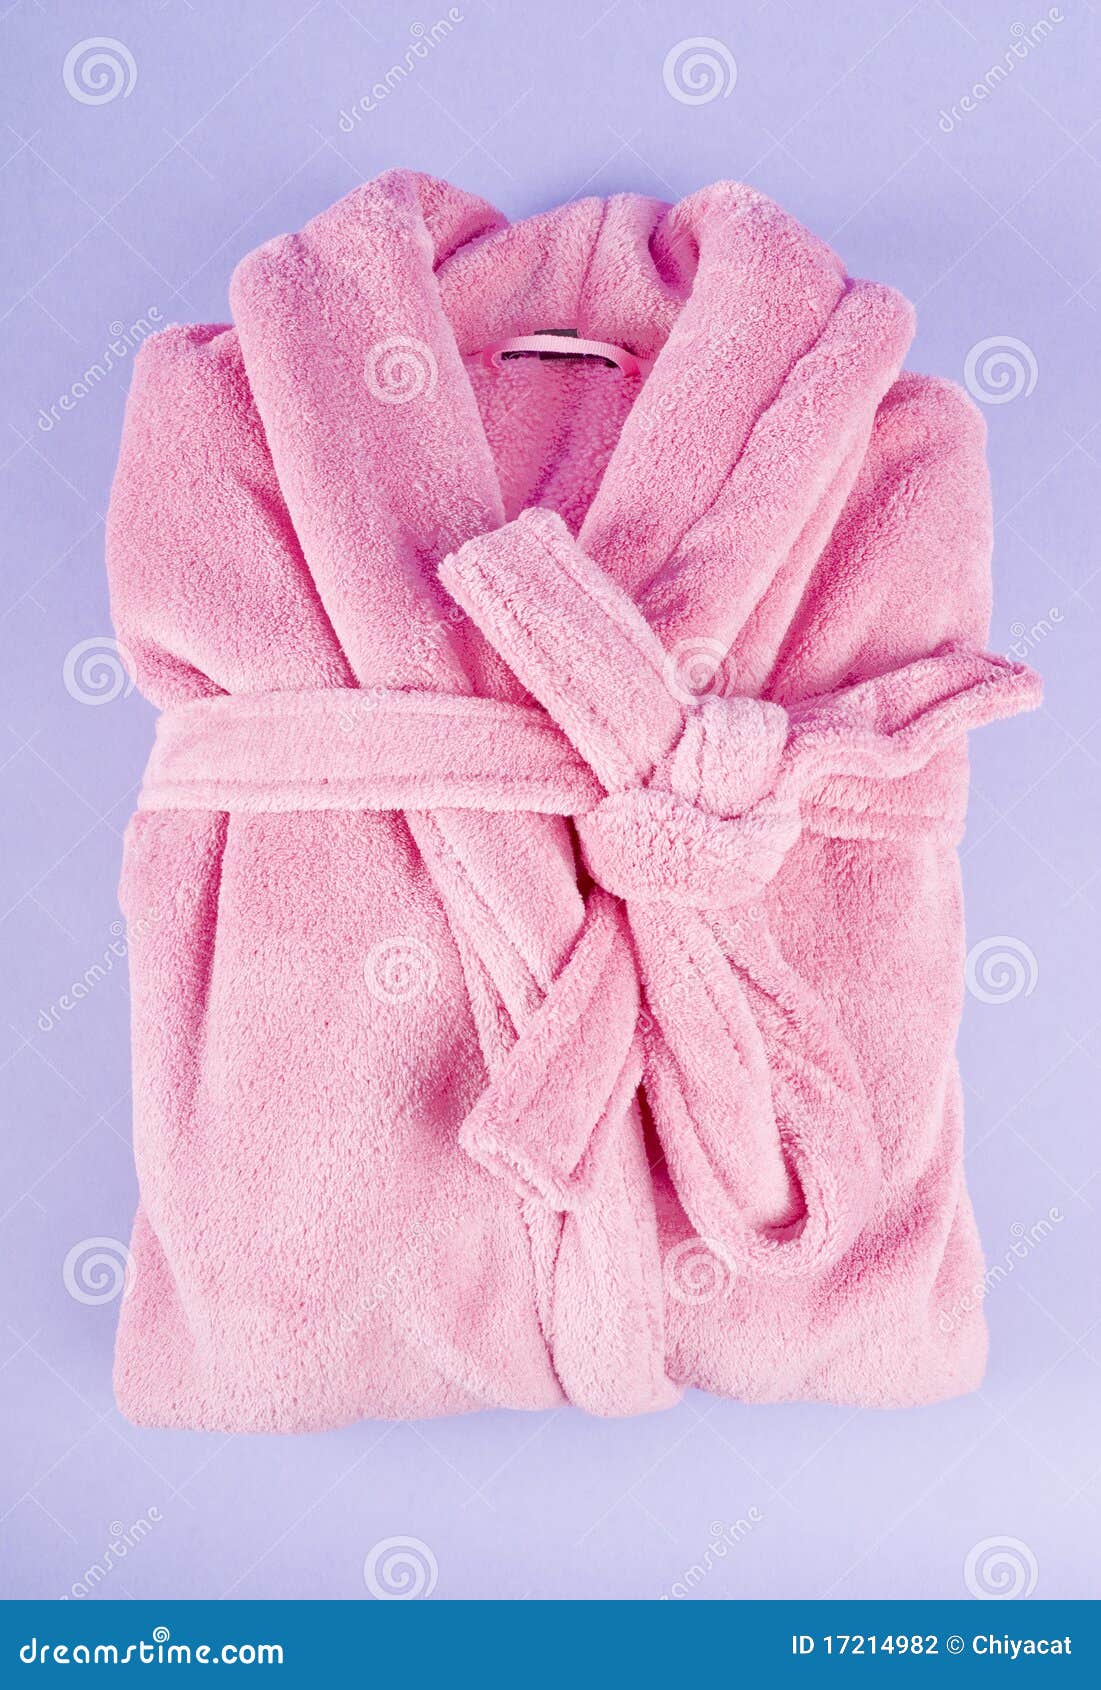 pink bathrobe